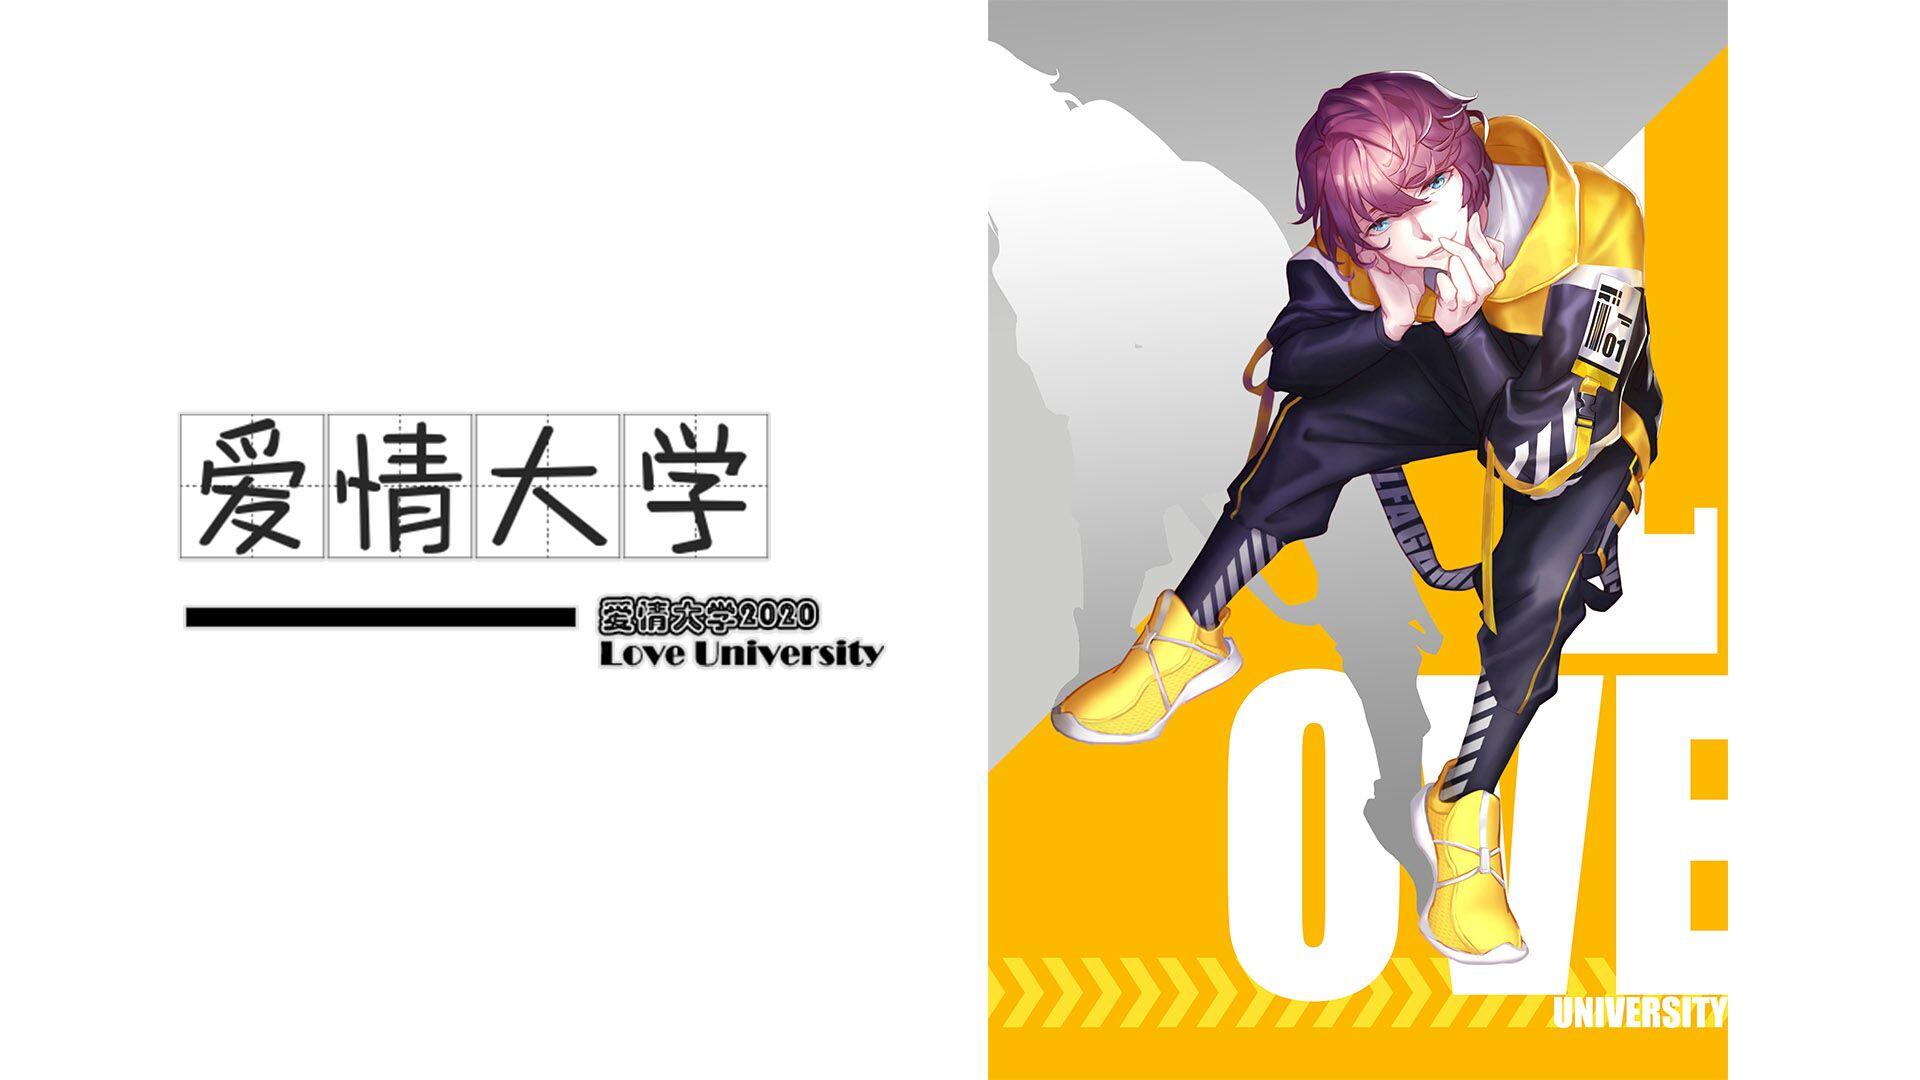 Banner of 사랑의 대학 2020 